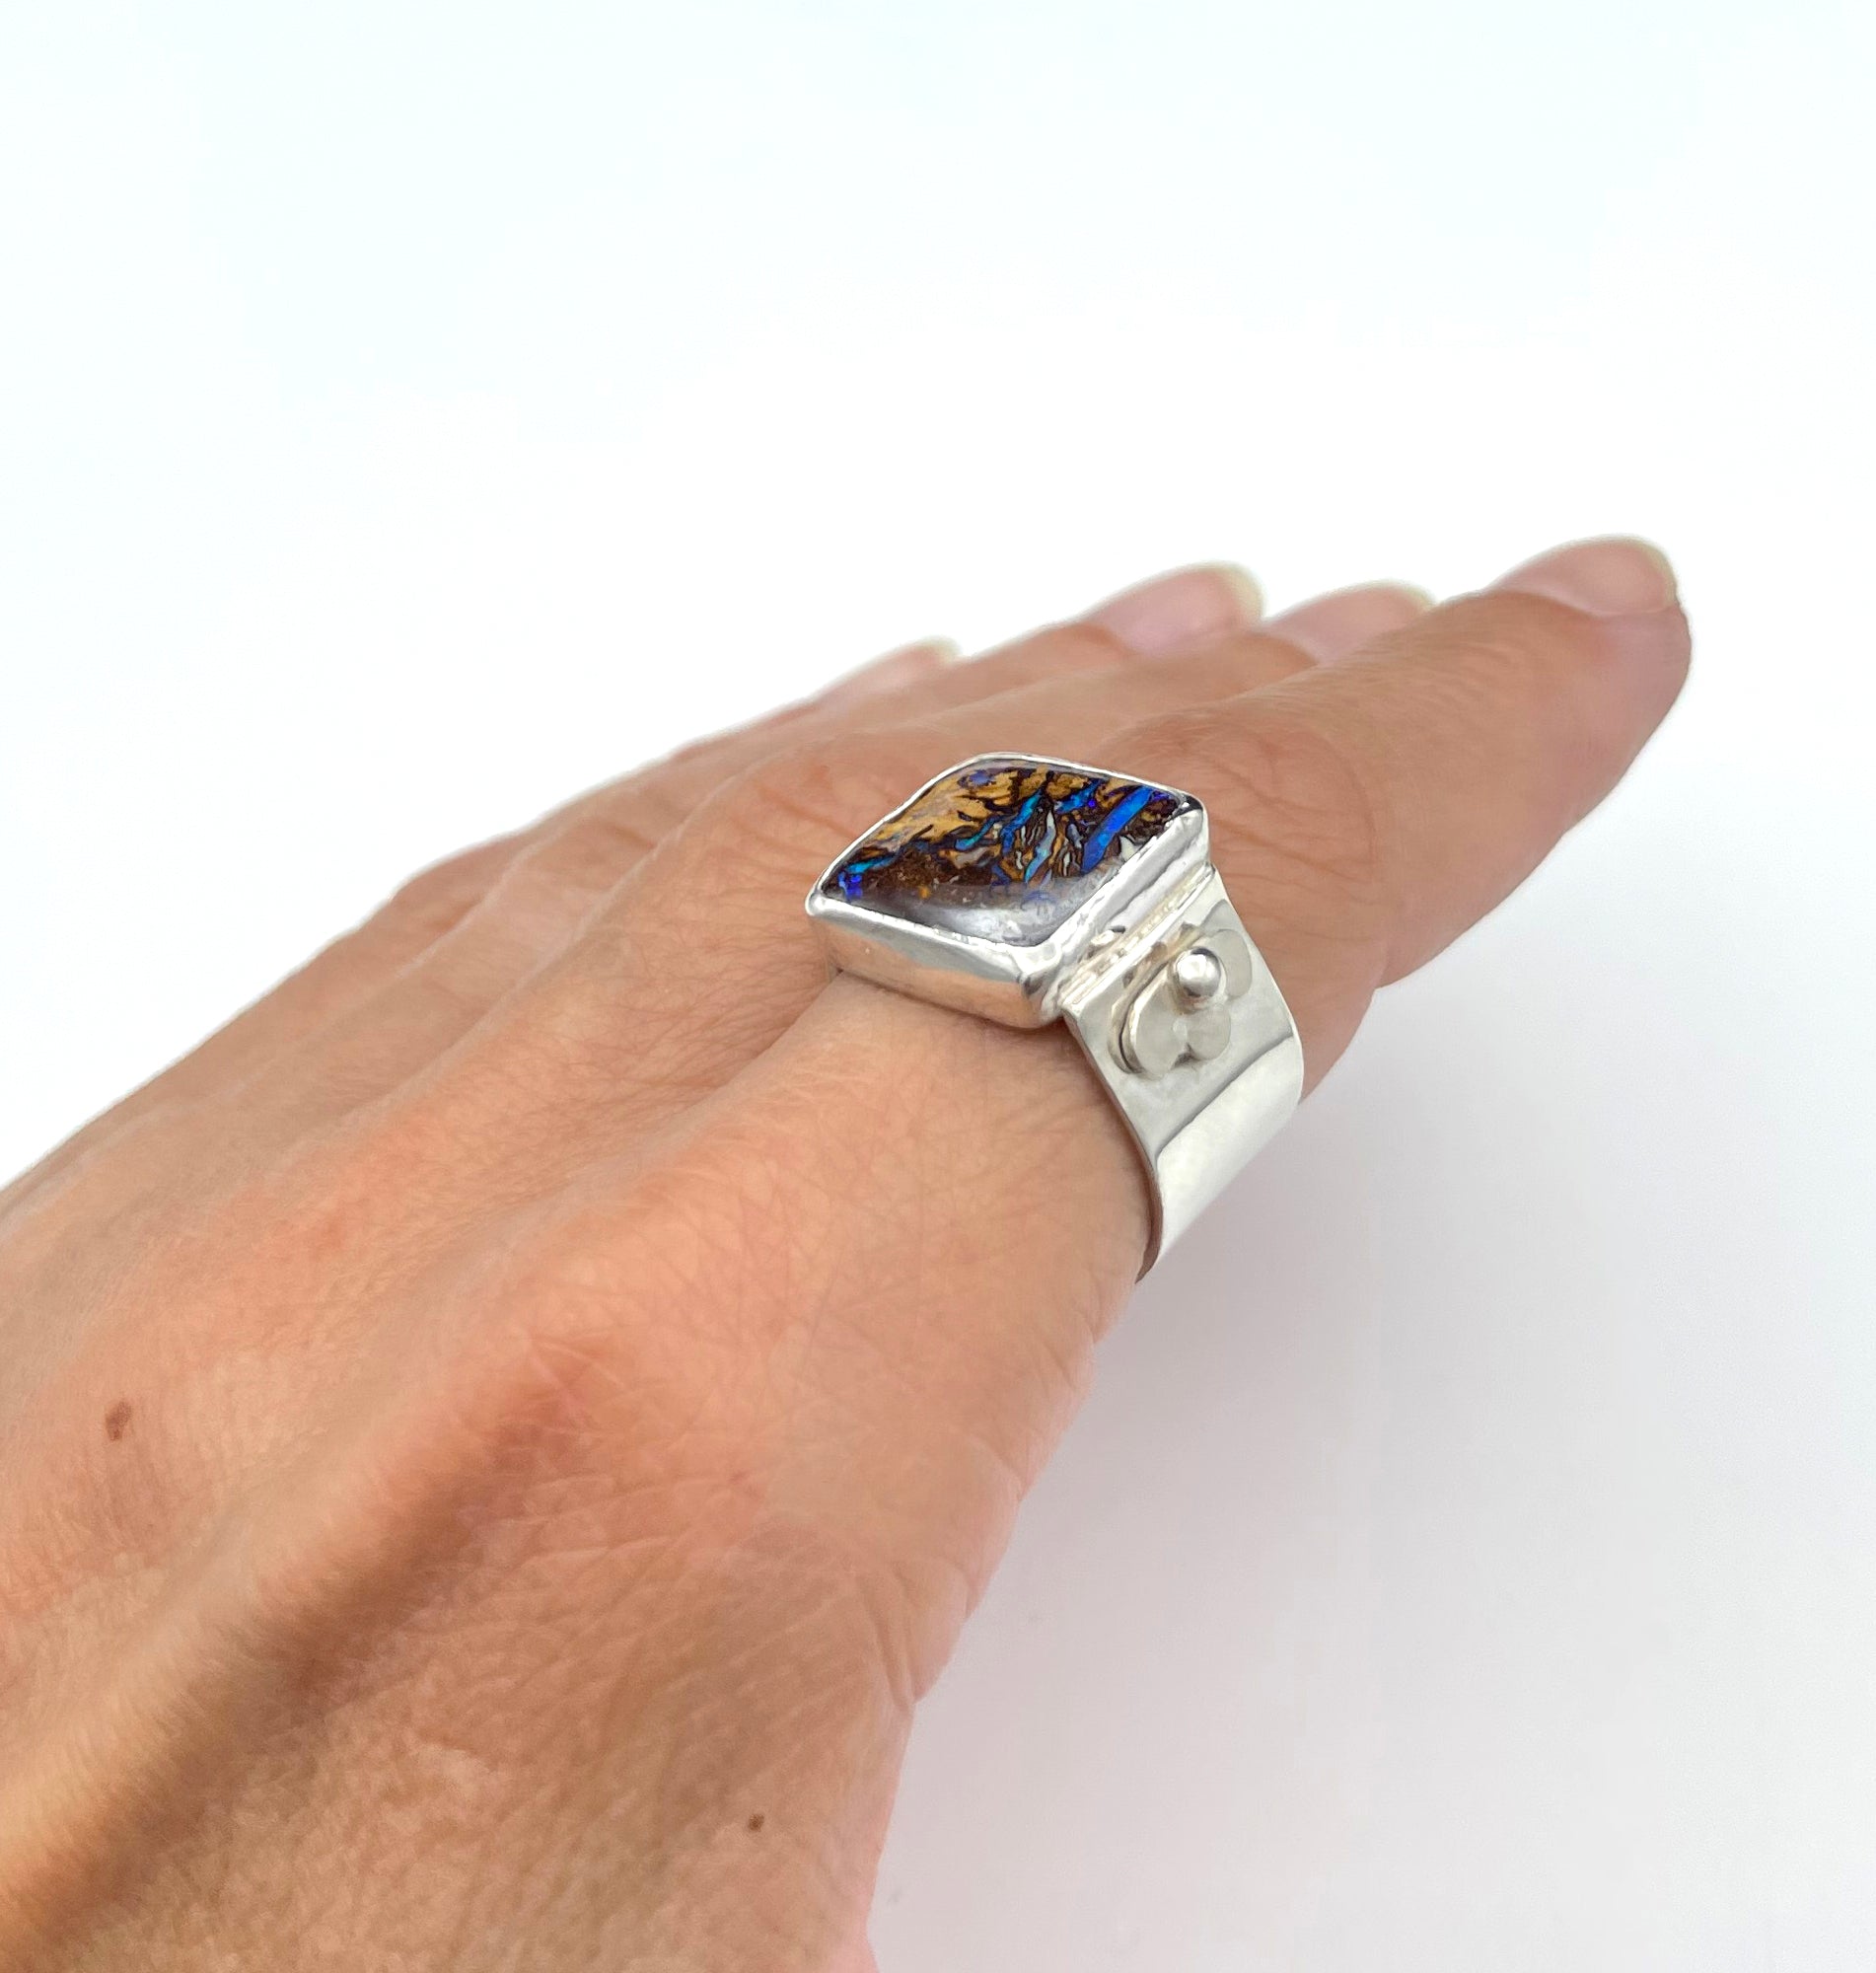 Australian Boulder Opal Ring, Wide Opal Ring in Sterling Silver, One of a Kind